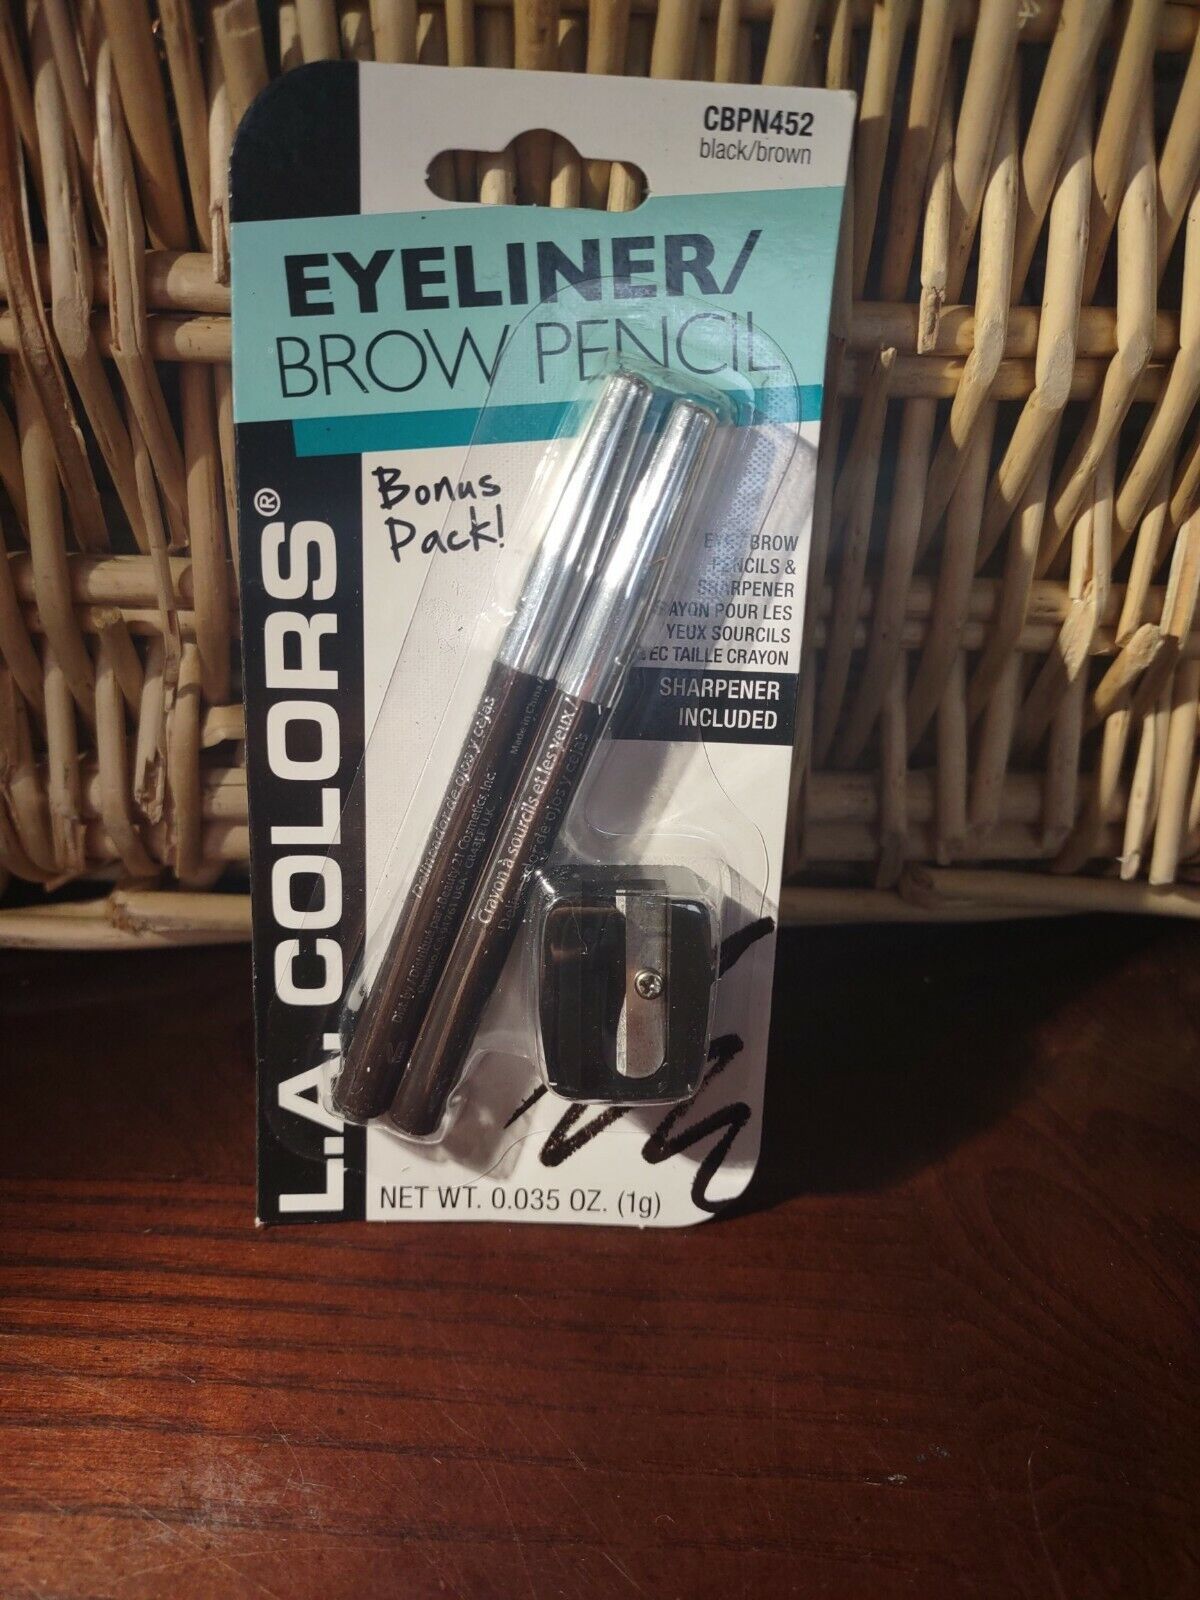 L.A. Colors Eyeliner/Brow Pencil Black/Brown Sharpener Included-New-SHIP N 24 HR - $14.73